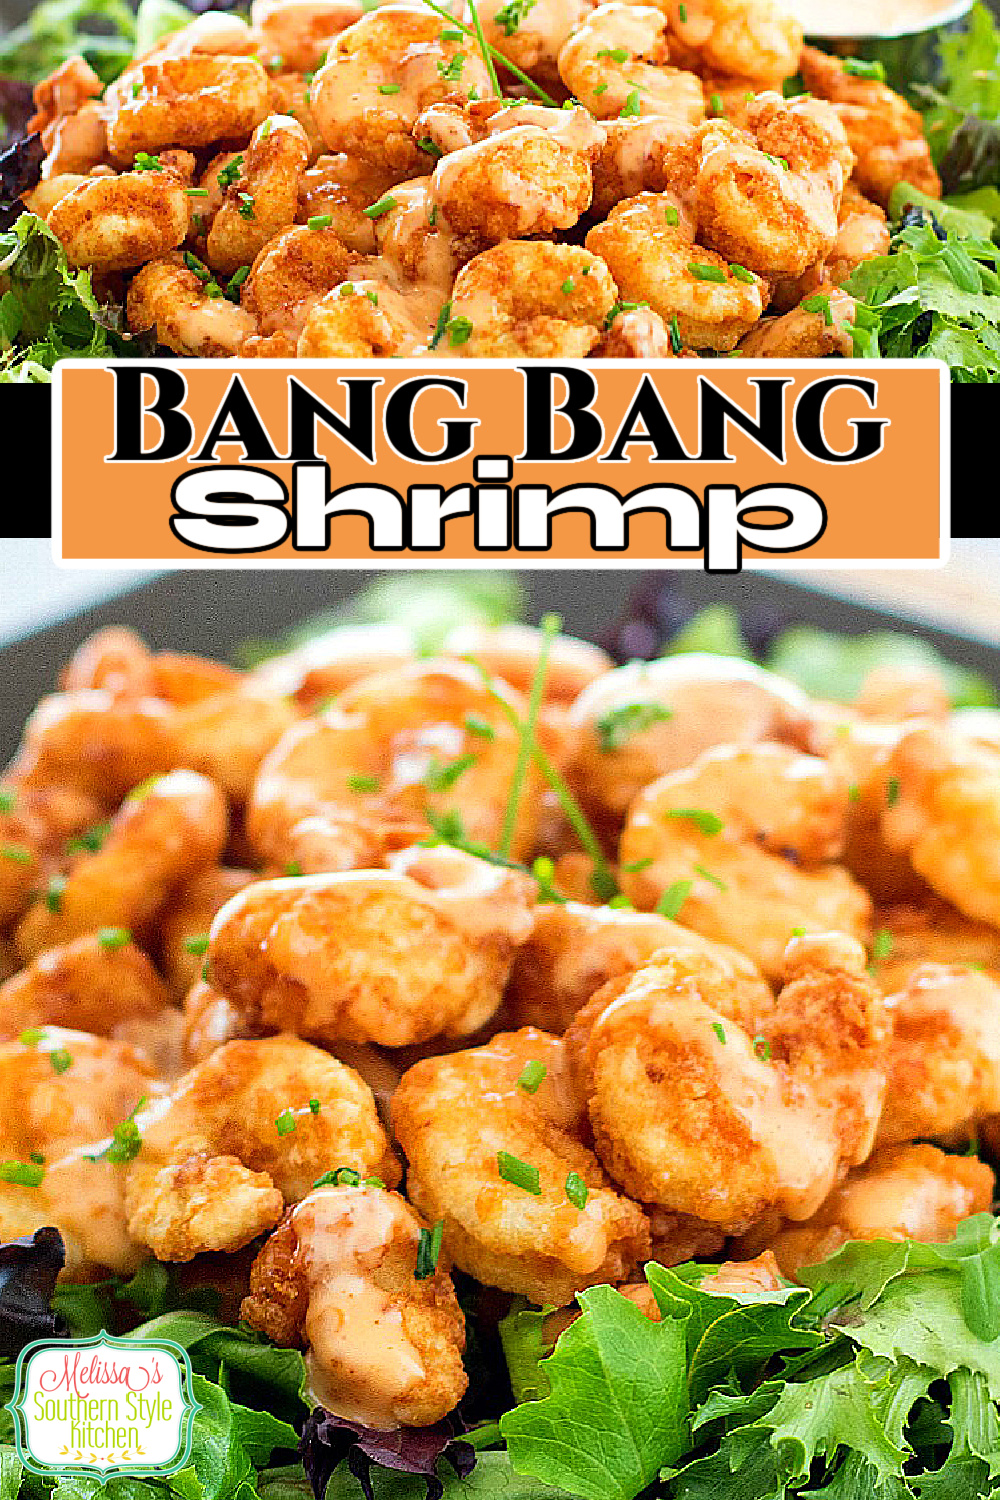 Save money and make this better-than-copycat Bang Bang Shrimp at home #bangbangshrimp #shrimprecipes #dinner #dinnerideas #seafoodrecipes #copycatrecipes #seafood #shrimp #friedshrimp #appetizers #spicy #food #recipes via @melissasssk